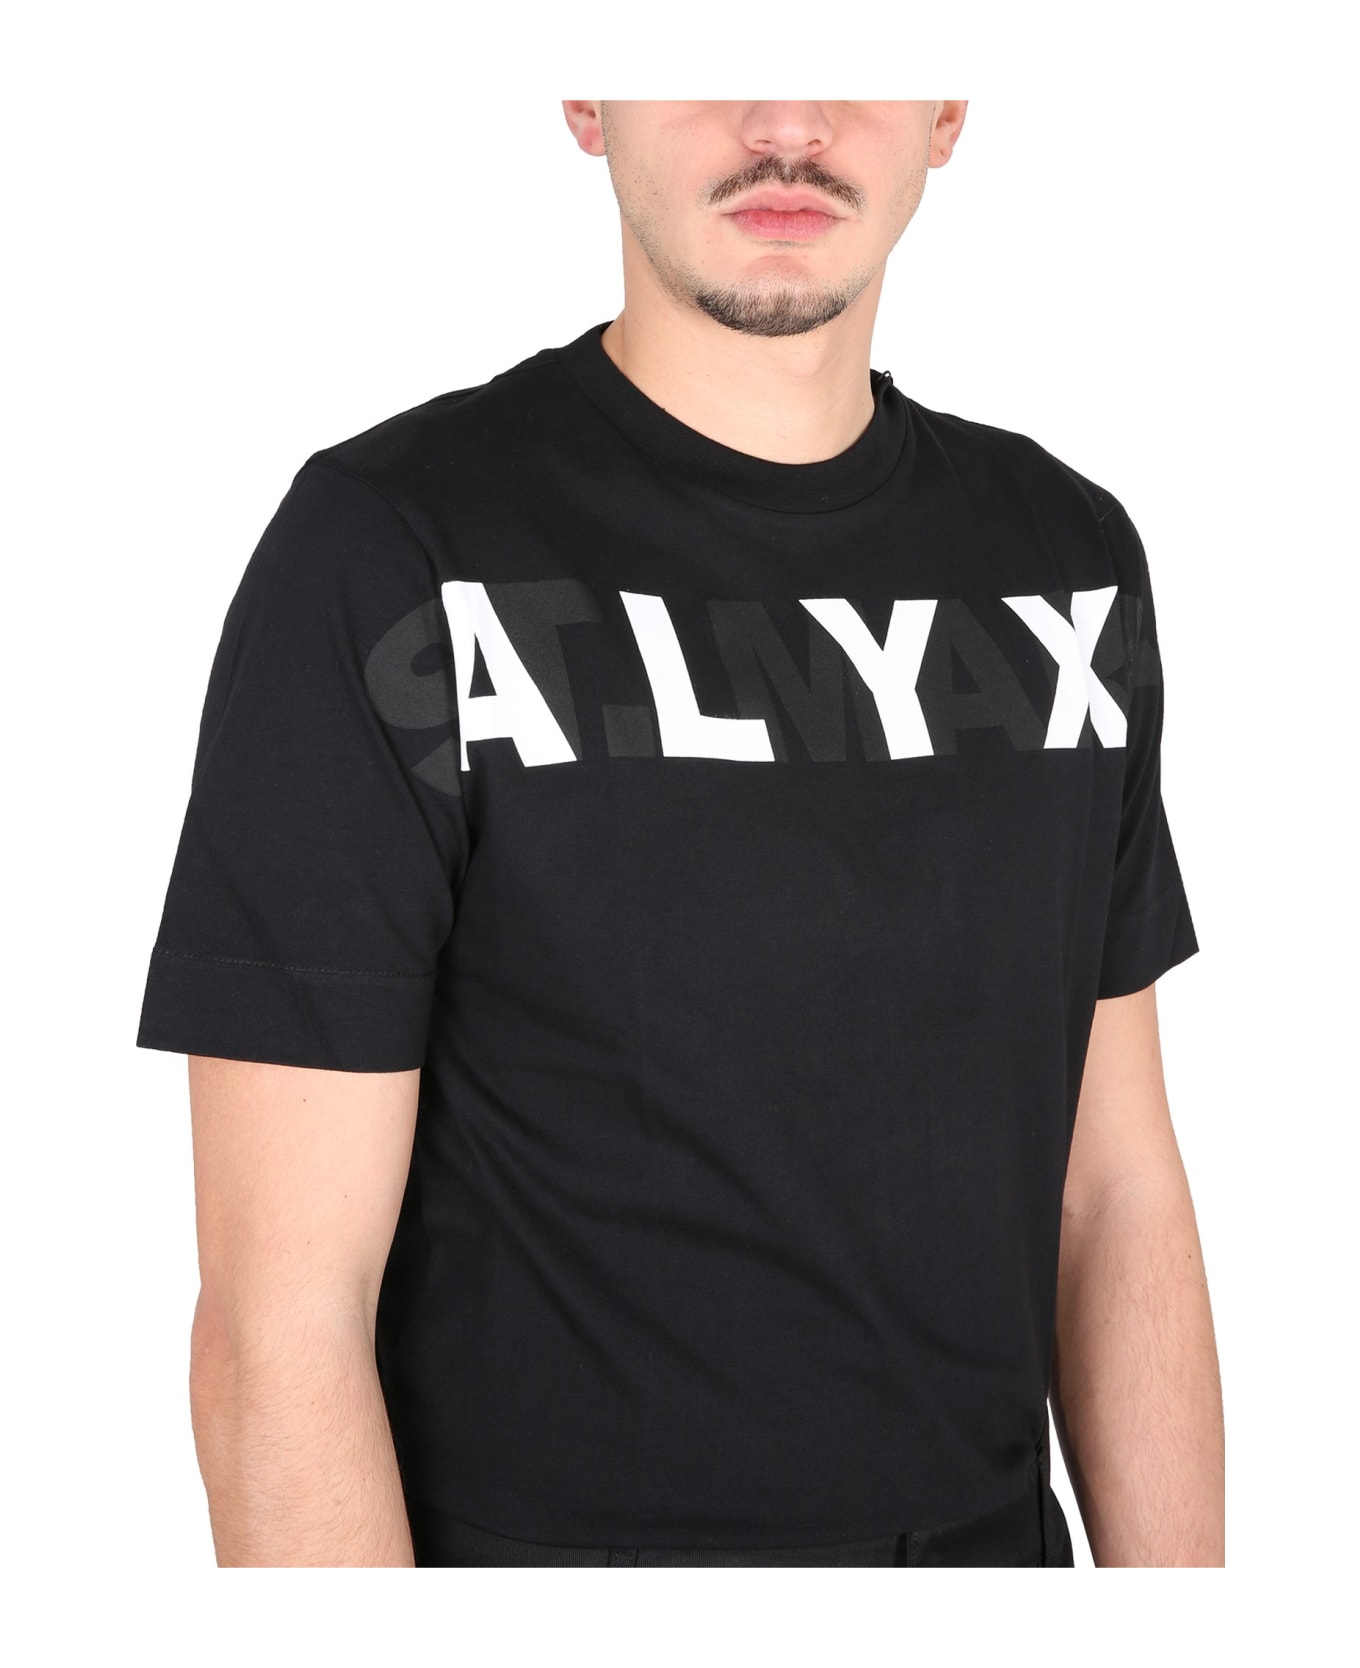 1017 ALYX 9SM Logo Print T-shirt - NERO